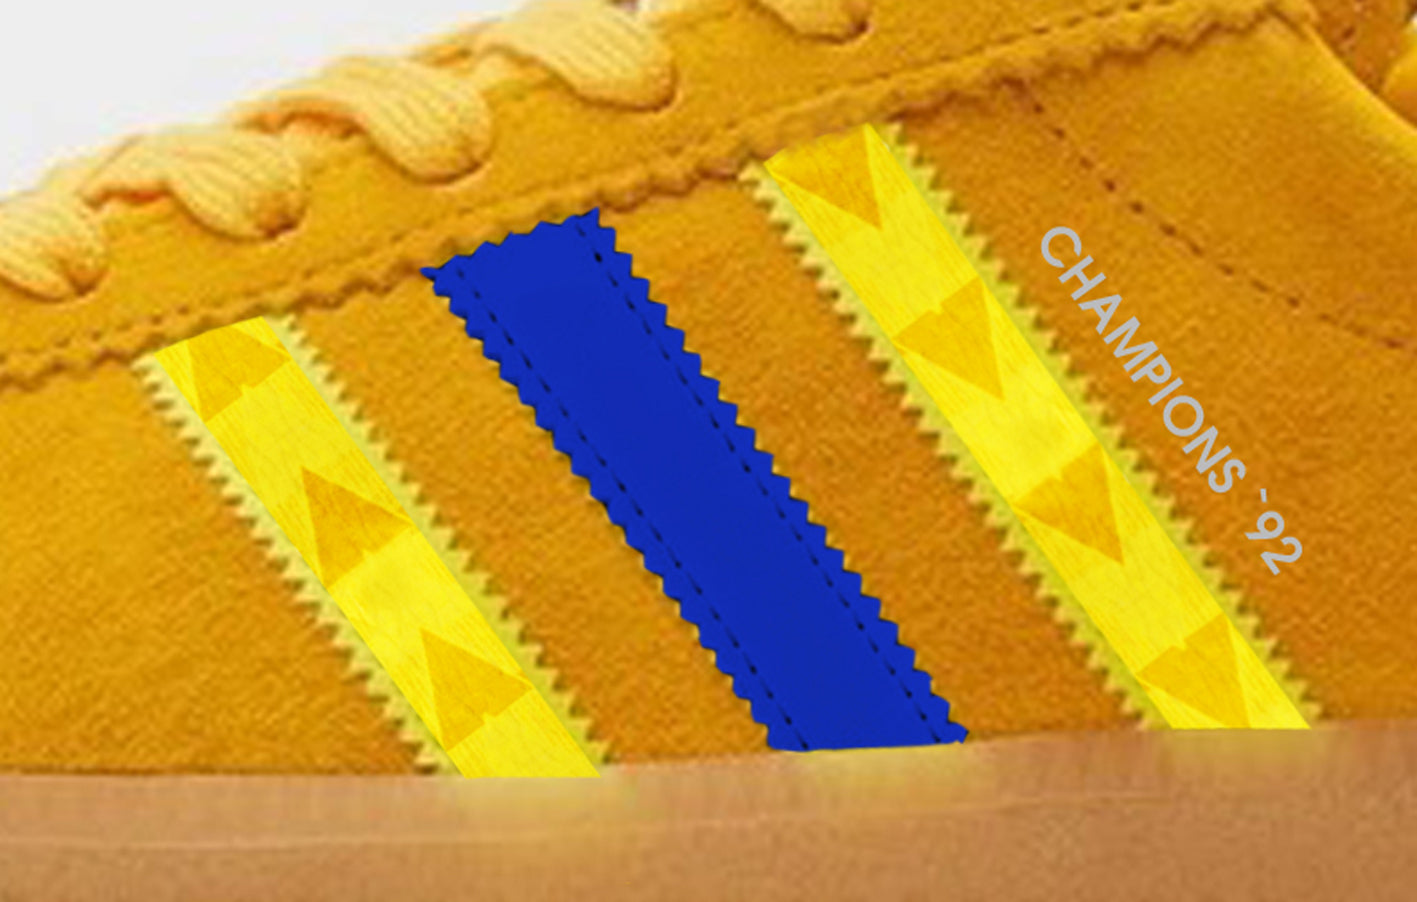 Limited edition Leeds Utd FC retro Gordon Strachan yellow / blue Adidas custom Sunshine trainers / sneakers